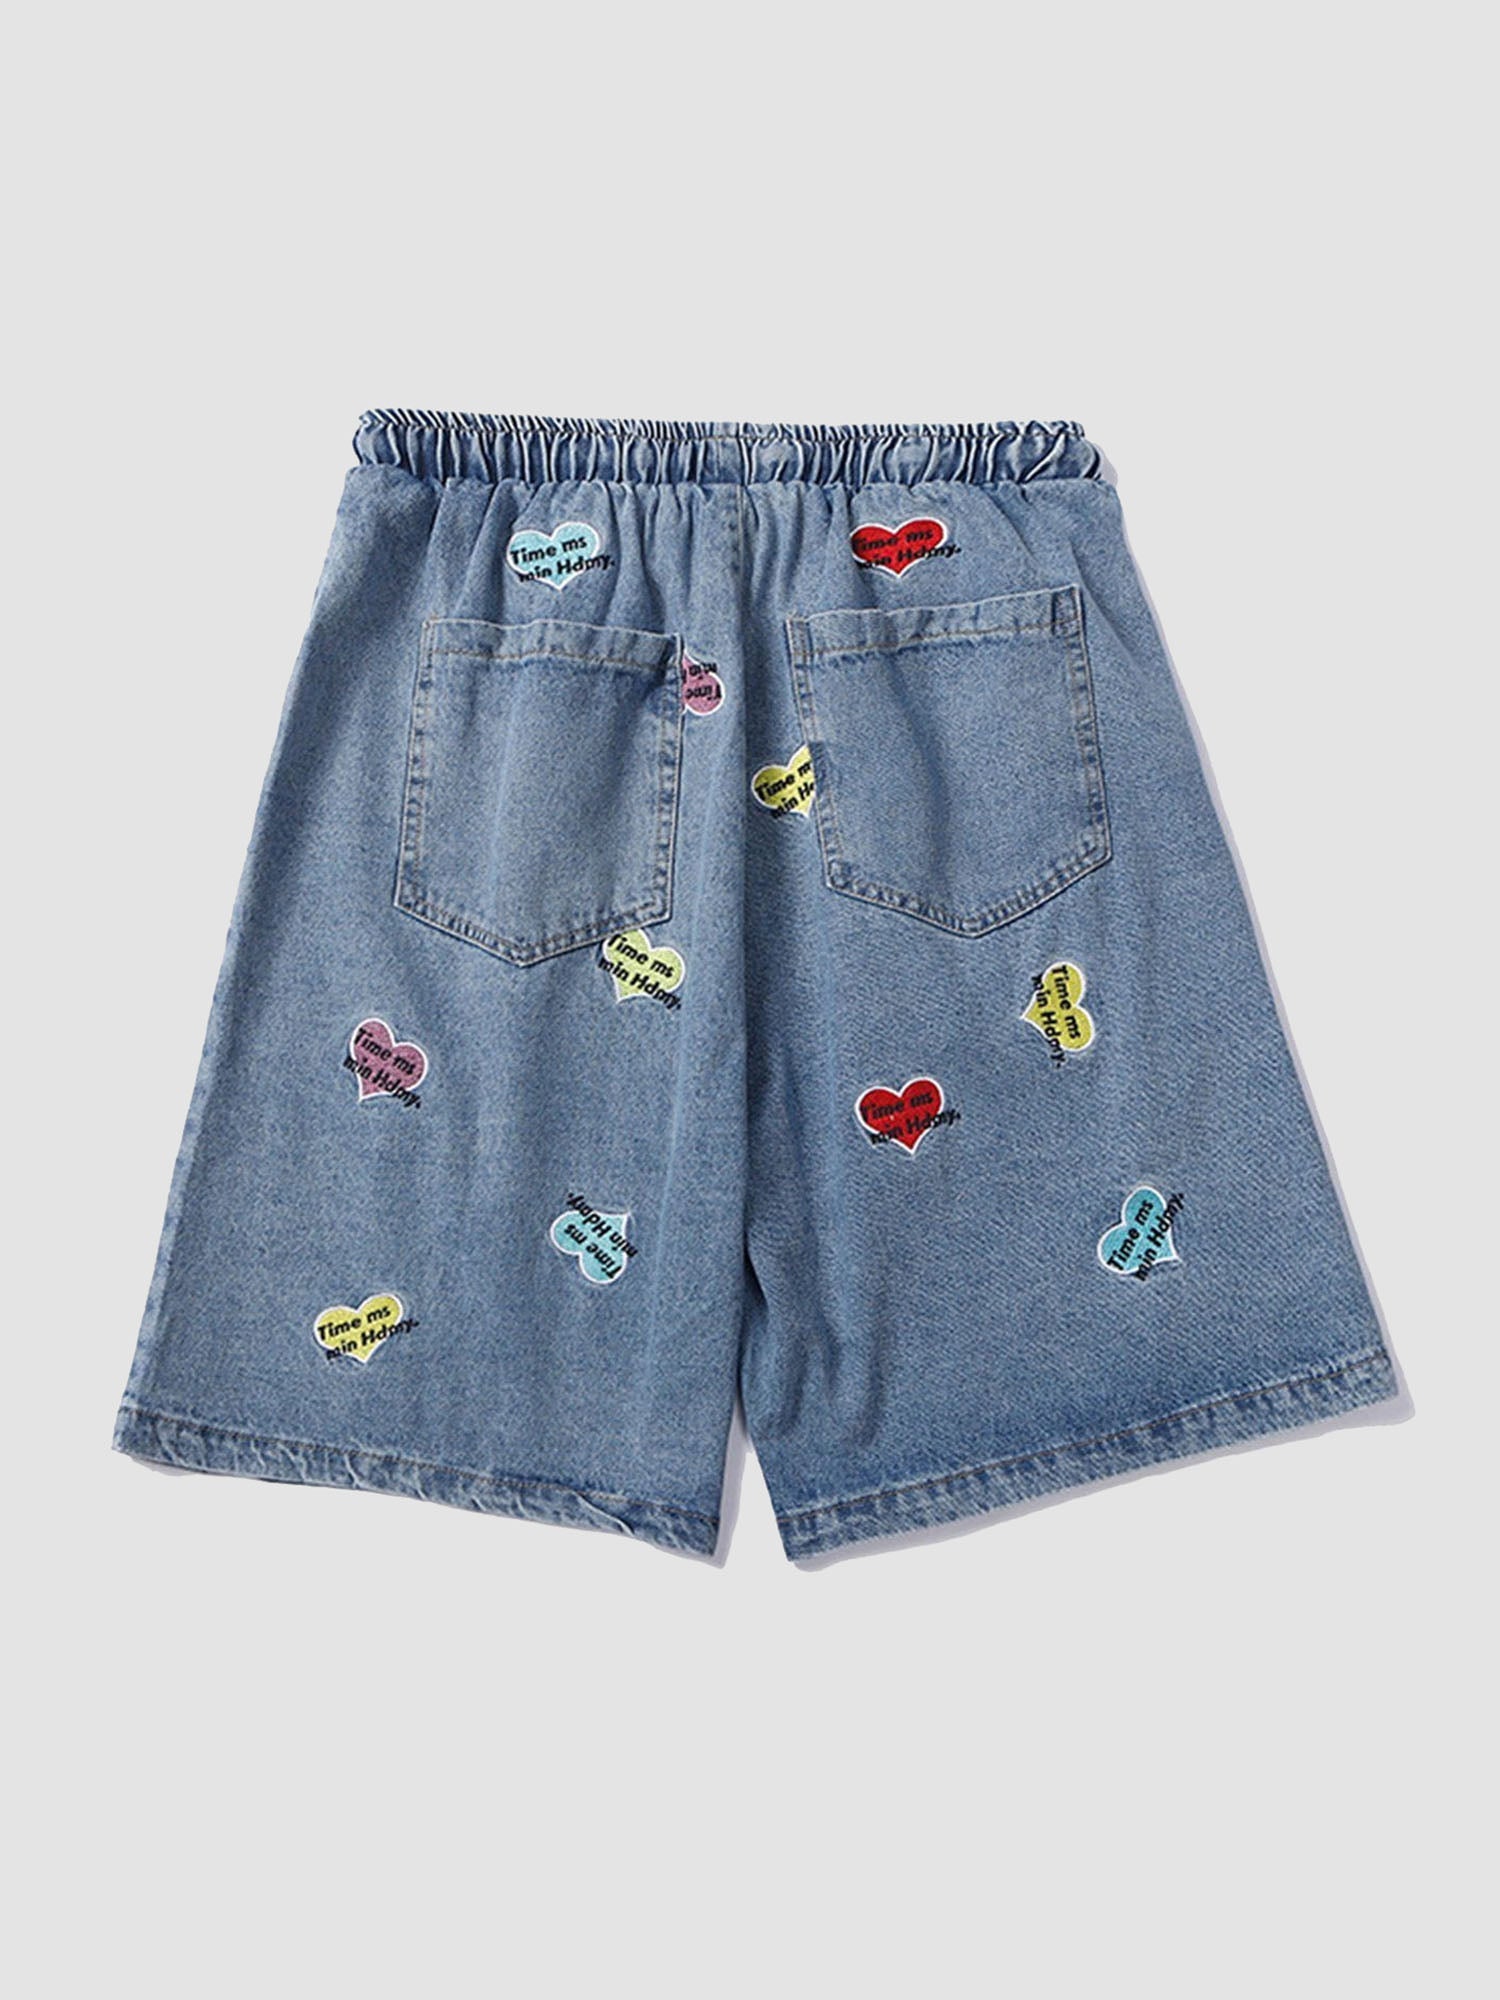 JUSTNOTAG Love Embroidered Full Print Denim Shorts Drawstring Waist Shorts